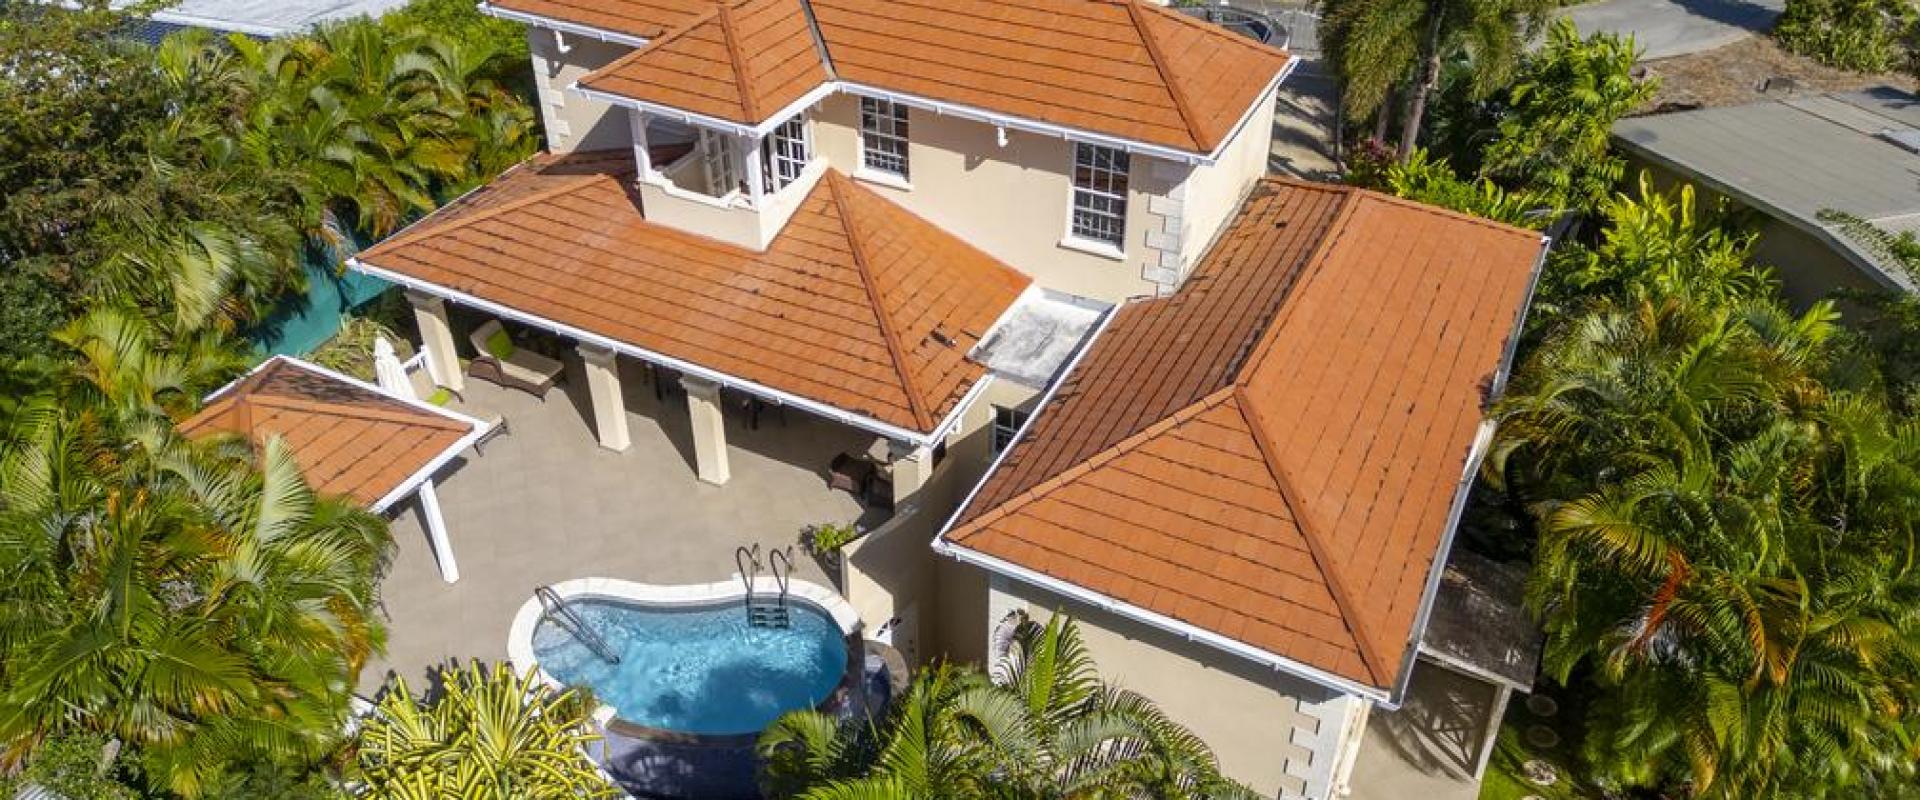 Tara Barbados 4 Bedroom Holiday Rental Villa Aerial Shot of Home